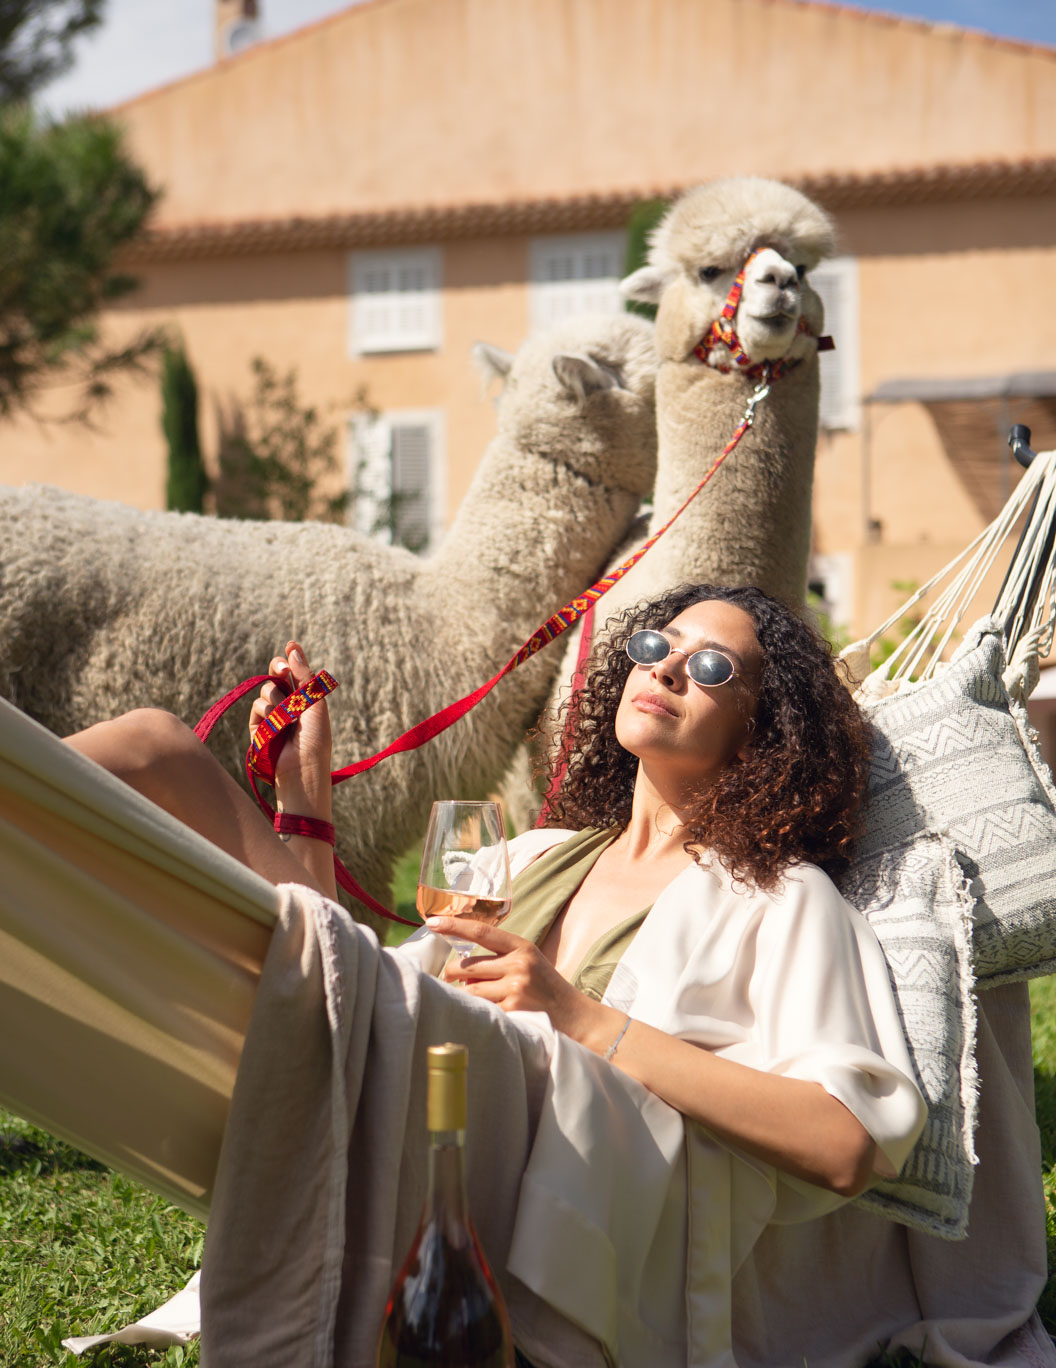 Girl drinking wine in a hammock holds a pet llama on a leash